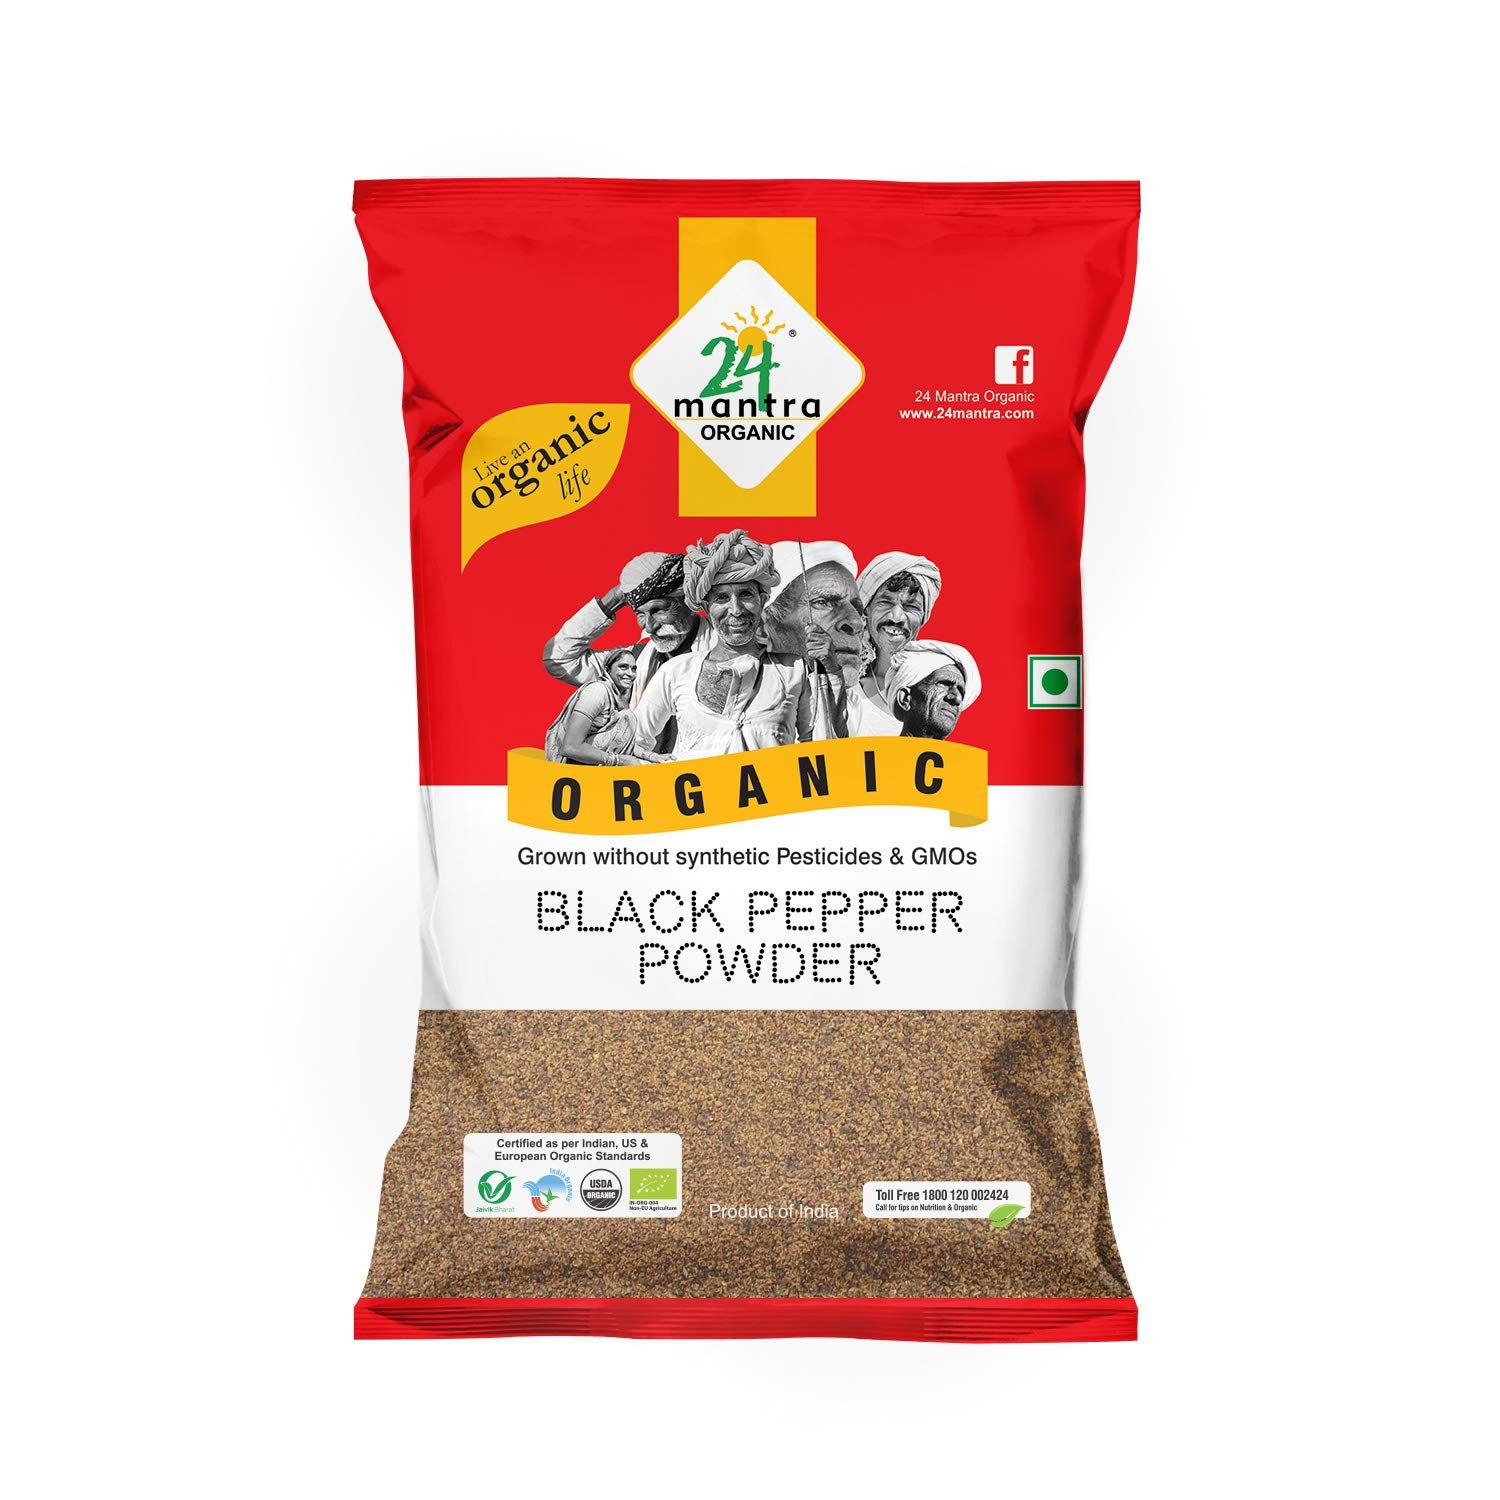 24 Mantra Organic Black Pepper Powder Image